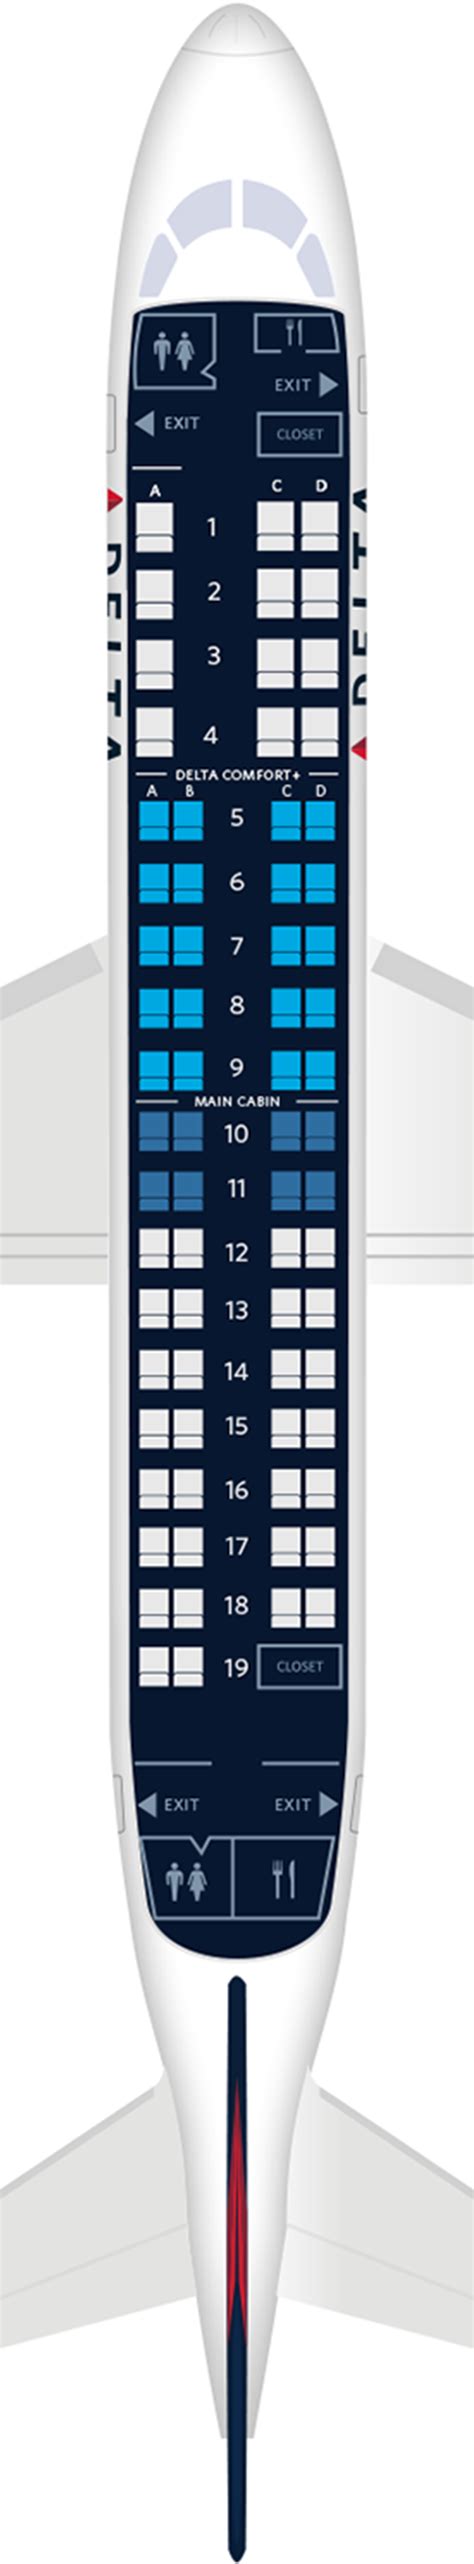 Planes & Seat Maps > Embraer ERJ-175 (E75) Royal Jordanian Seat Maps. Embraer ERJ-175 (E75) Overview; Planes & Seat Maps. Airbus A319 (319) Airbus A320 (320) Airbus ...